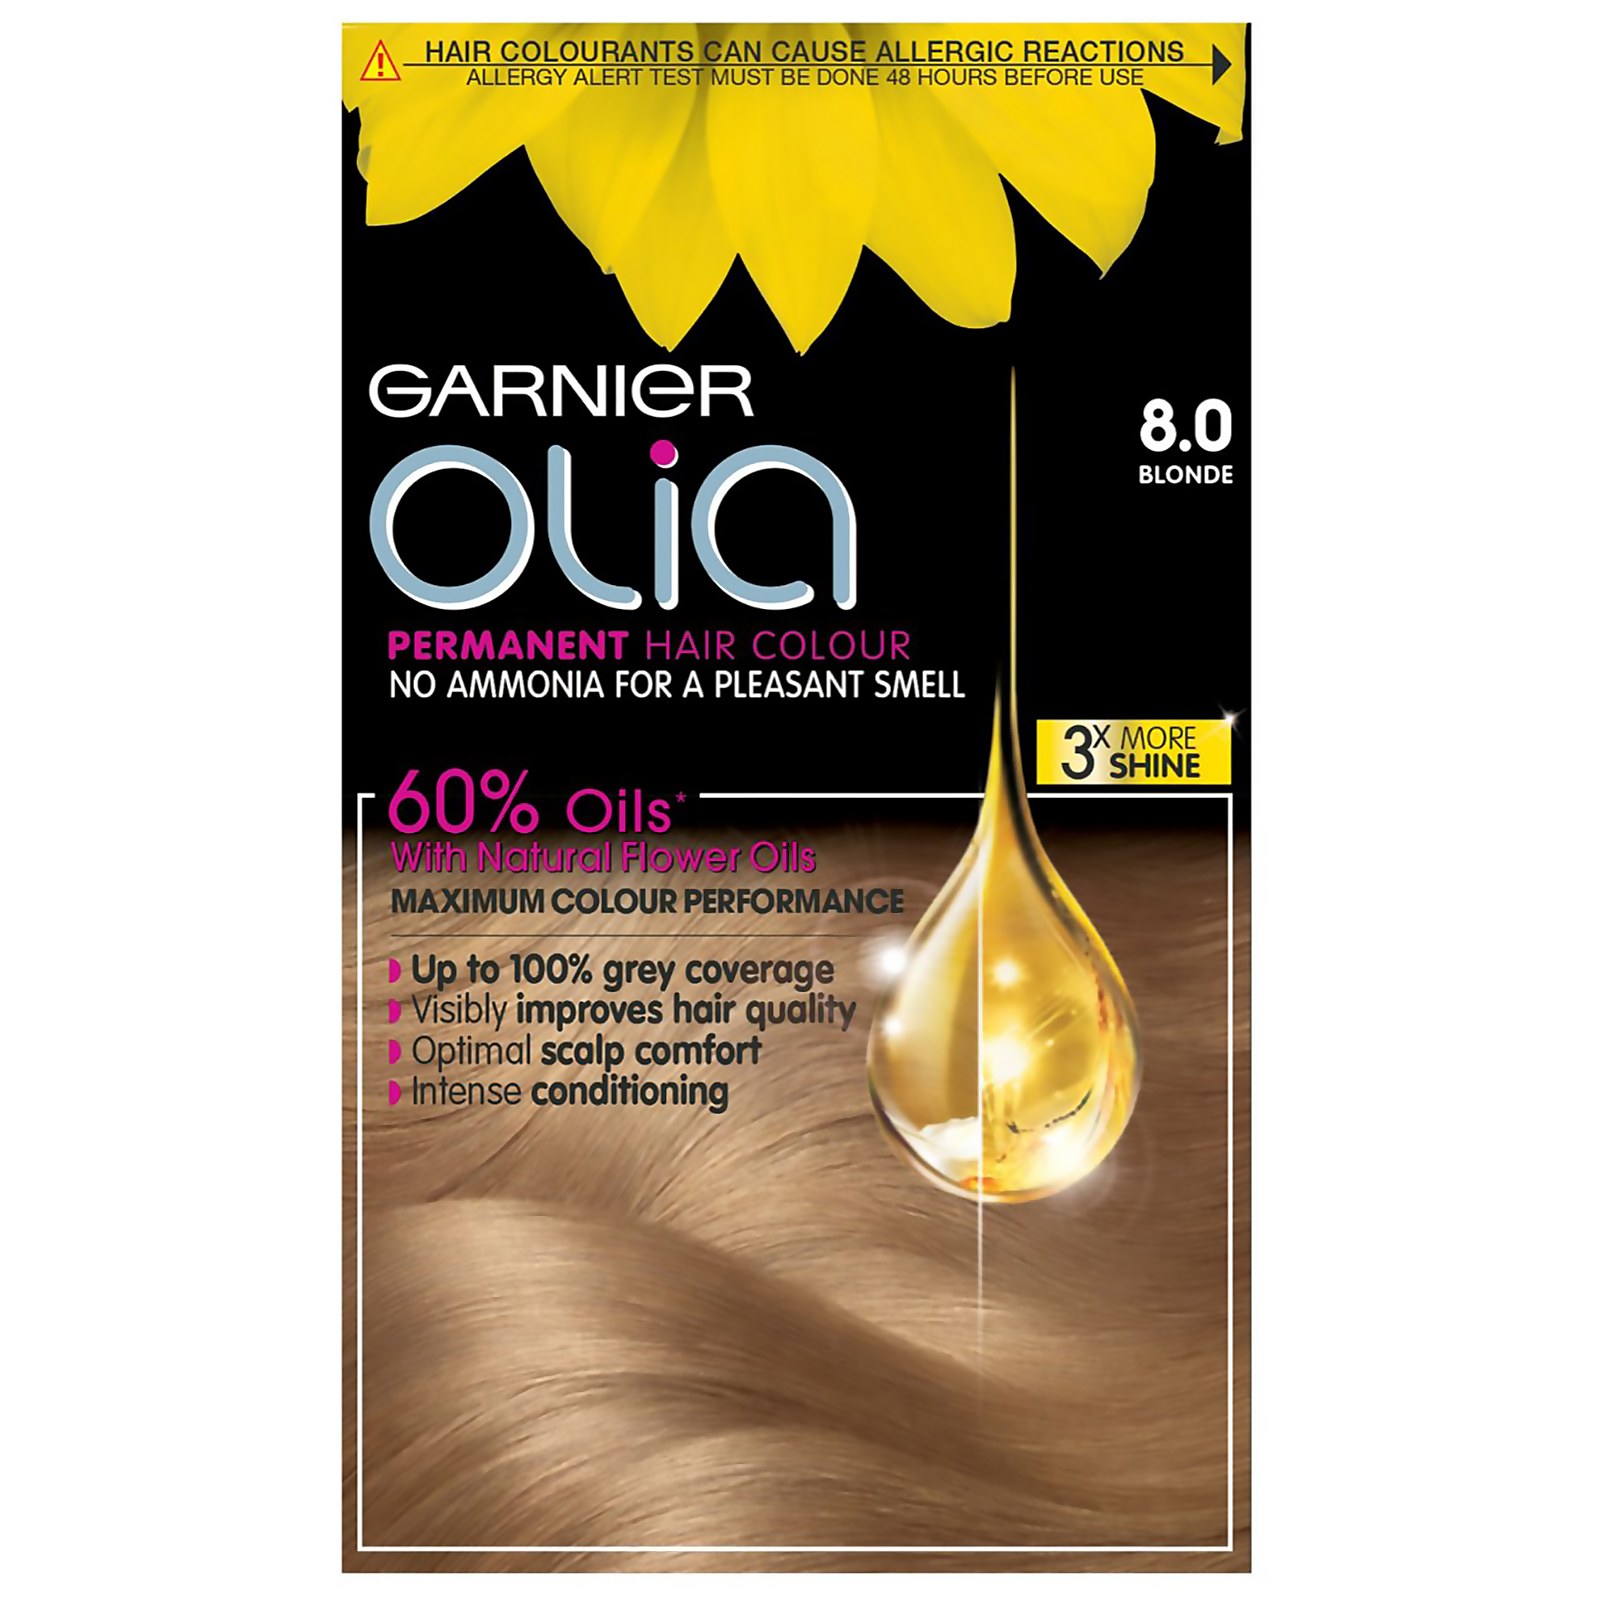 Garnier Olia Permanent Hair Dye (Various Shades) - 8.0 Blonde